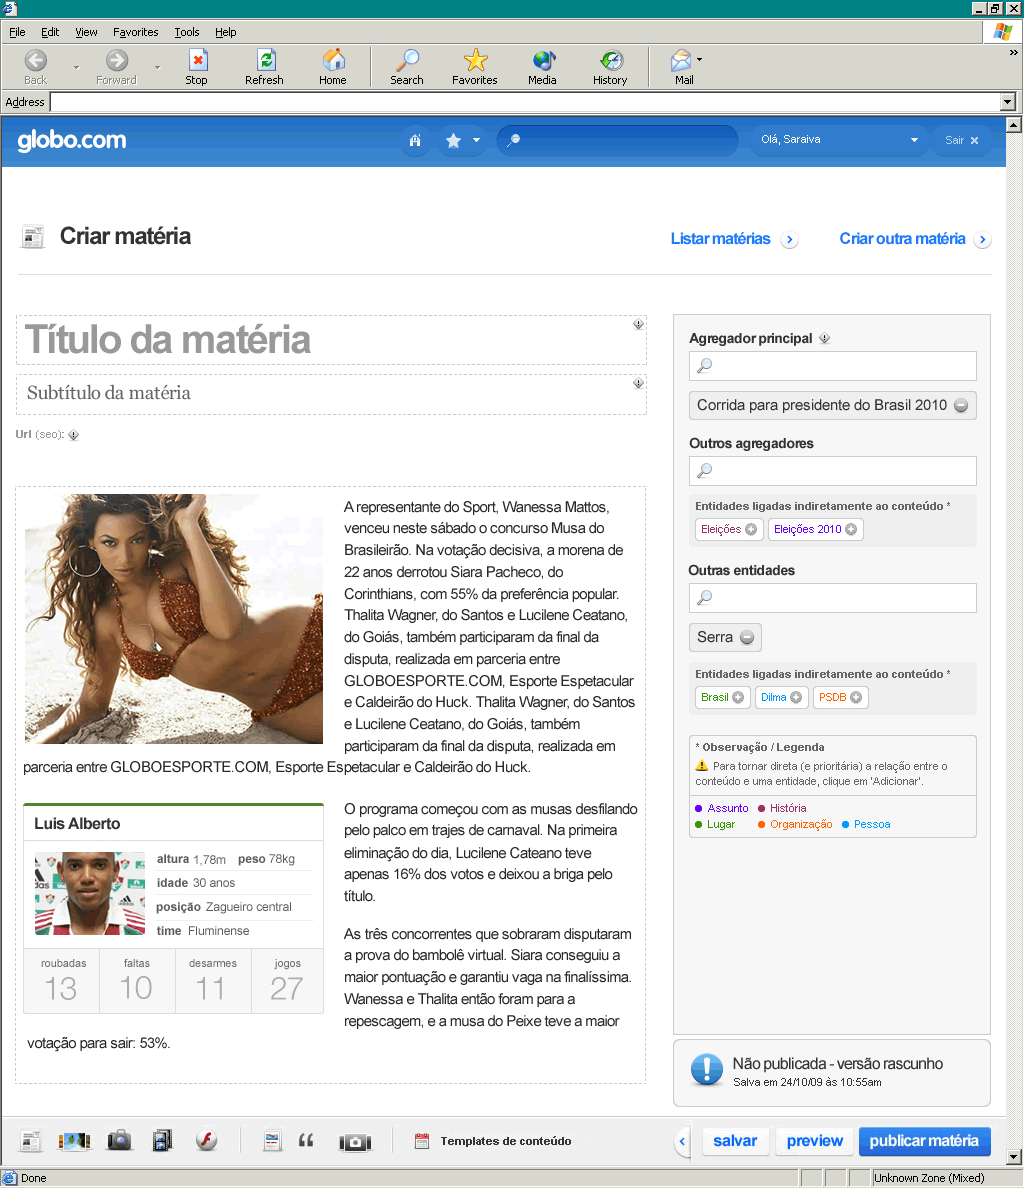 Globo.com’s semantic platform